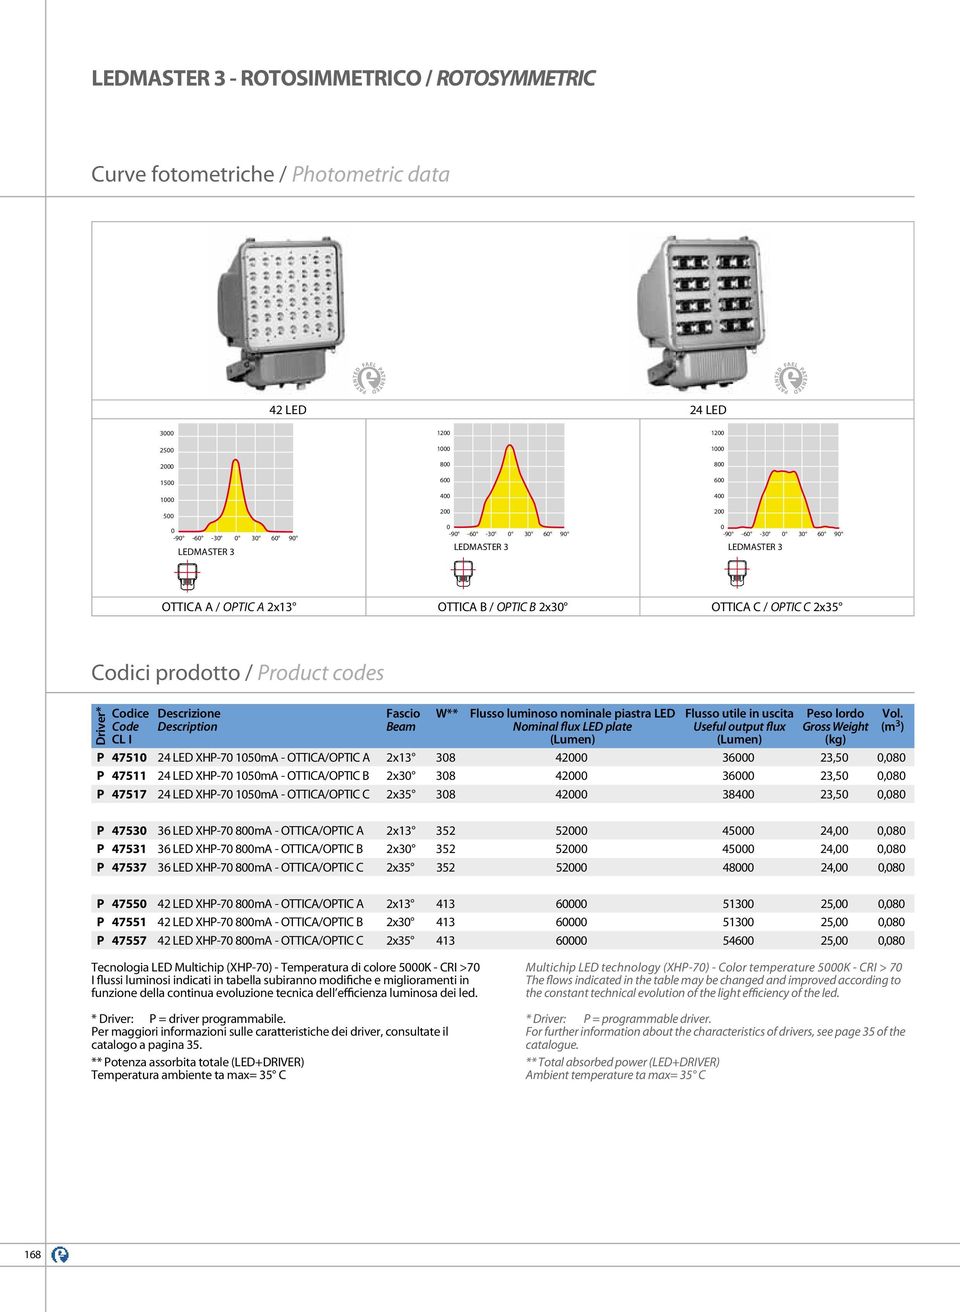 plate (lumen) flusso utile in uscita useful output flux (lumen) peso lordo gross weight (kg) P 4751 24 LED XHP-7 15mA - OTTICA/OPTIC A 2x13 38 42 36 23,5,8 P 47511 24 LED XHP-7 15mA - OTTICA/OPTIC B